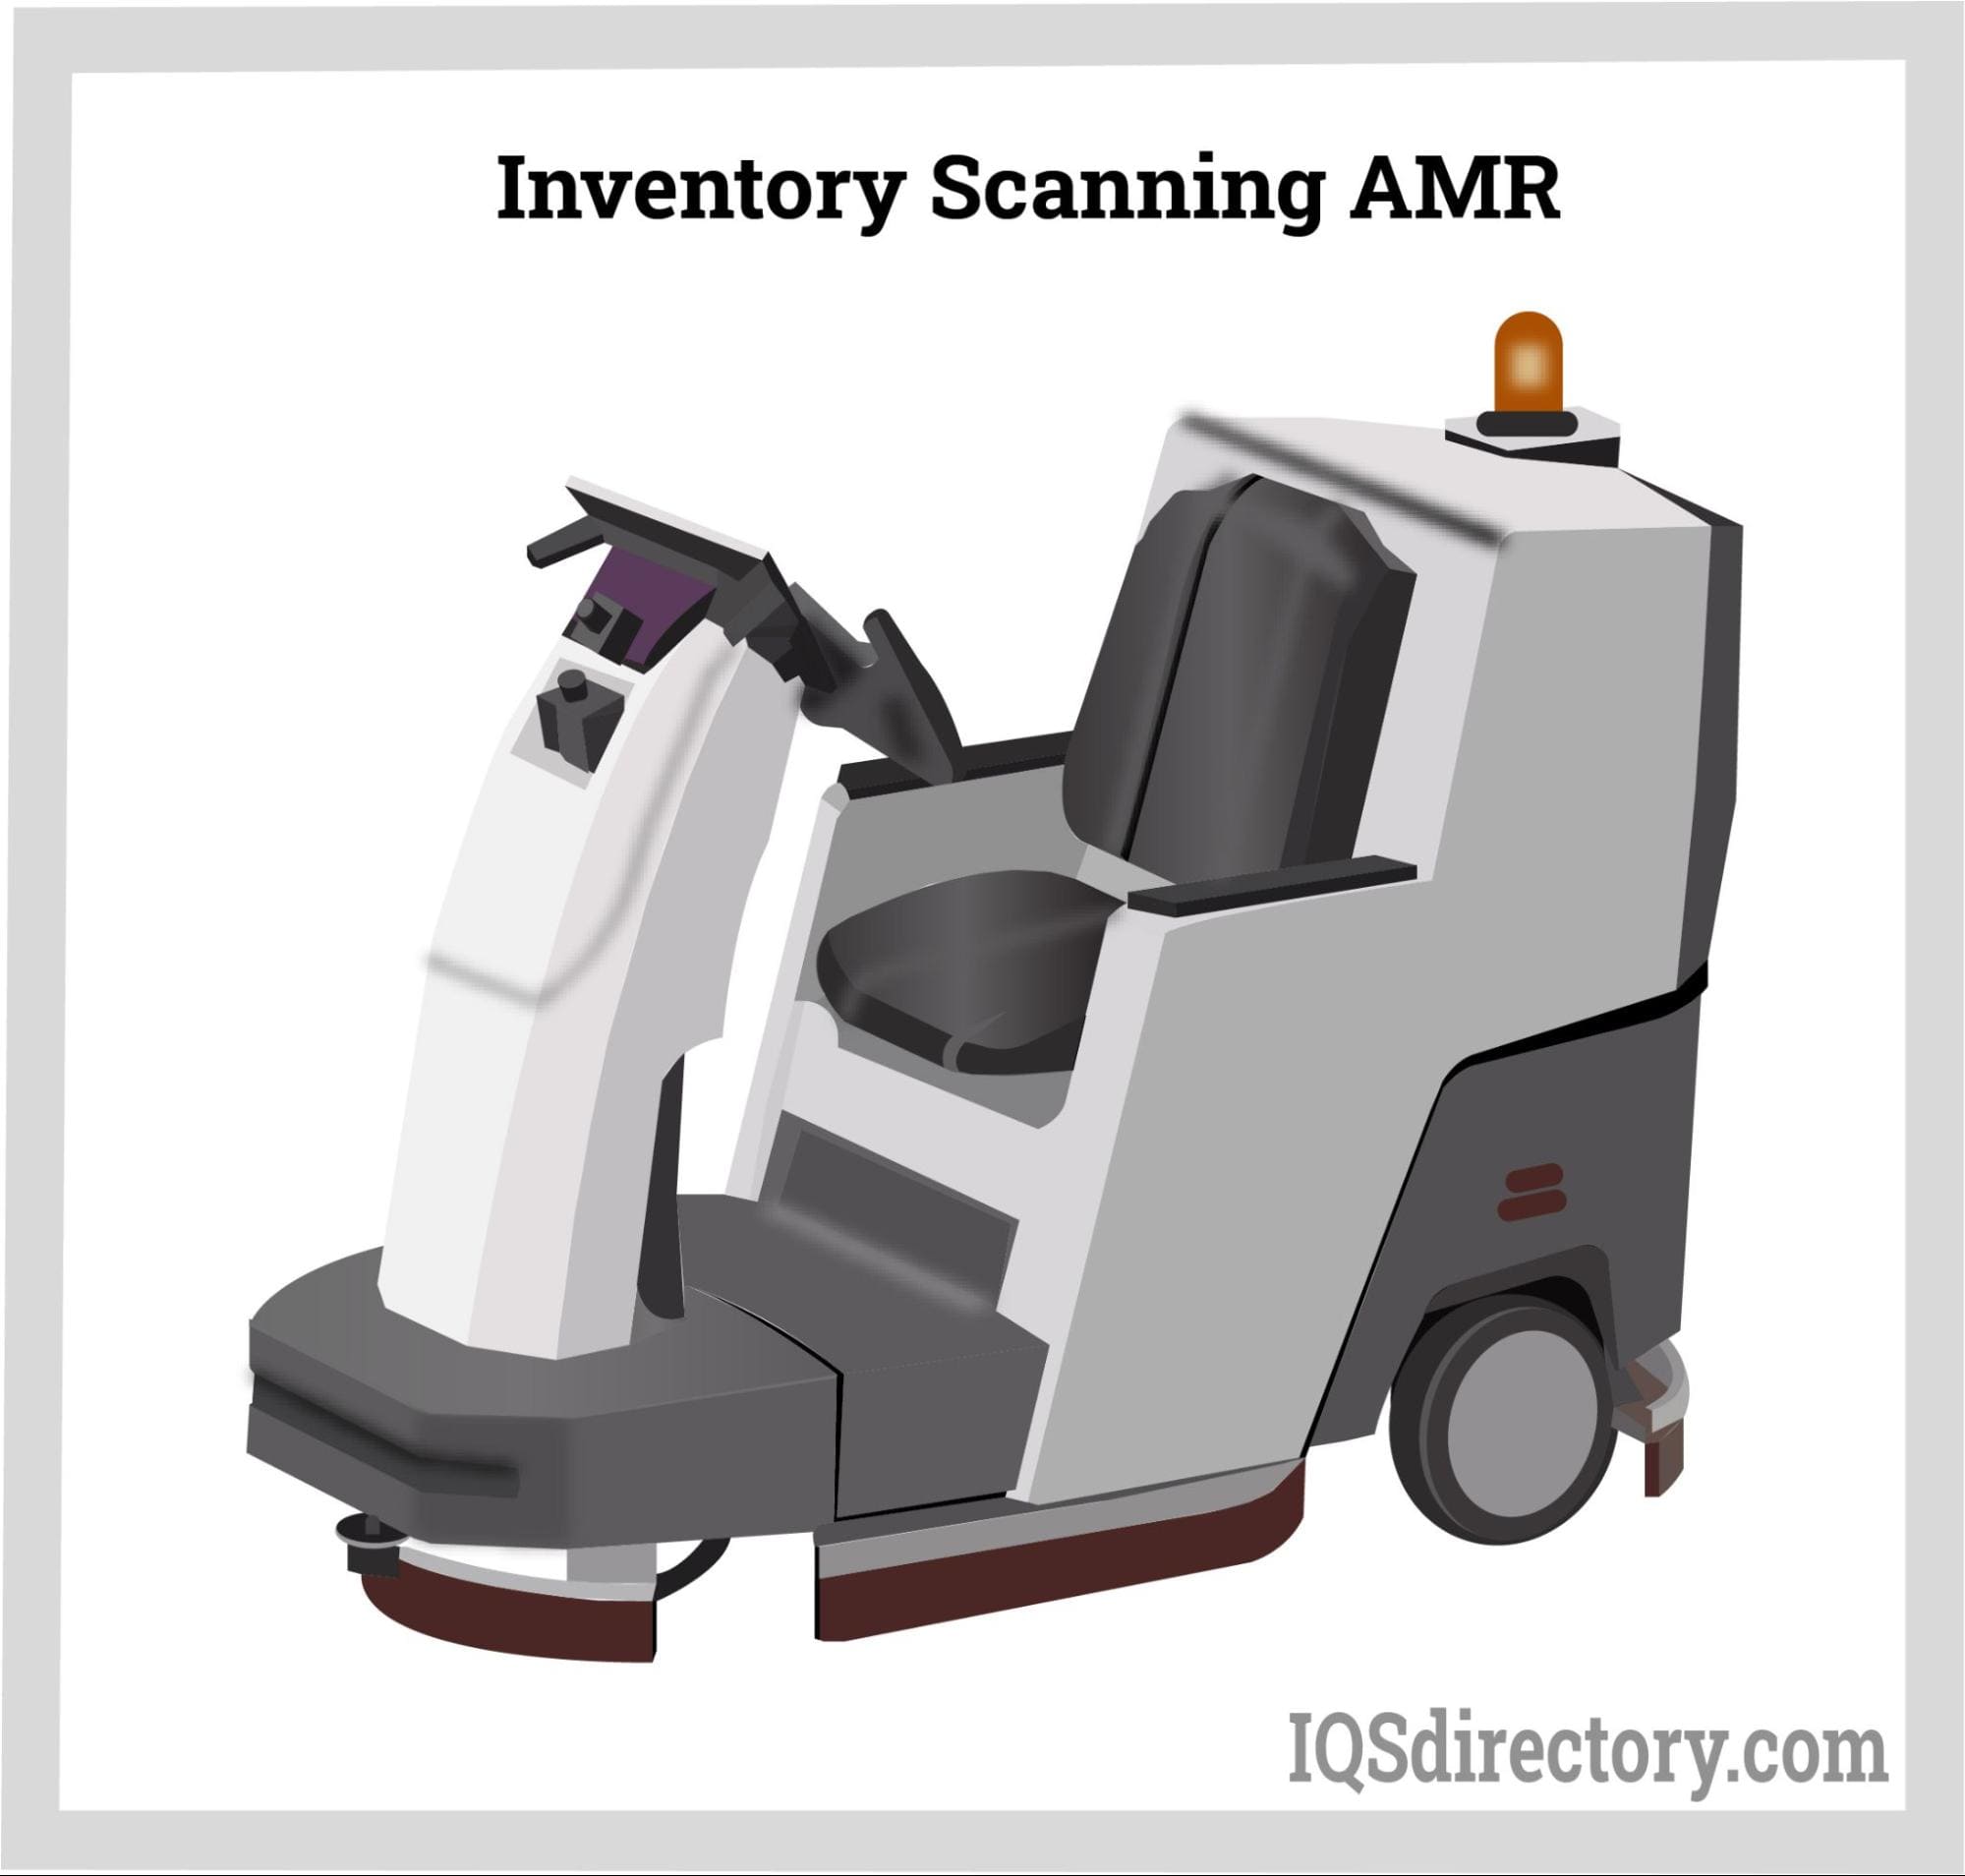 Inventory Scanning AMR